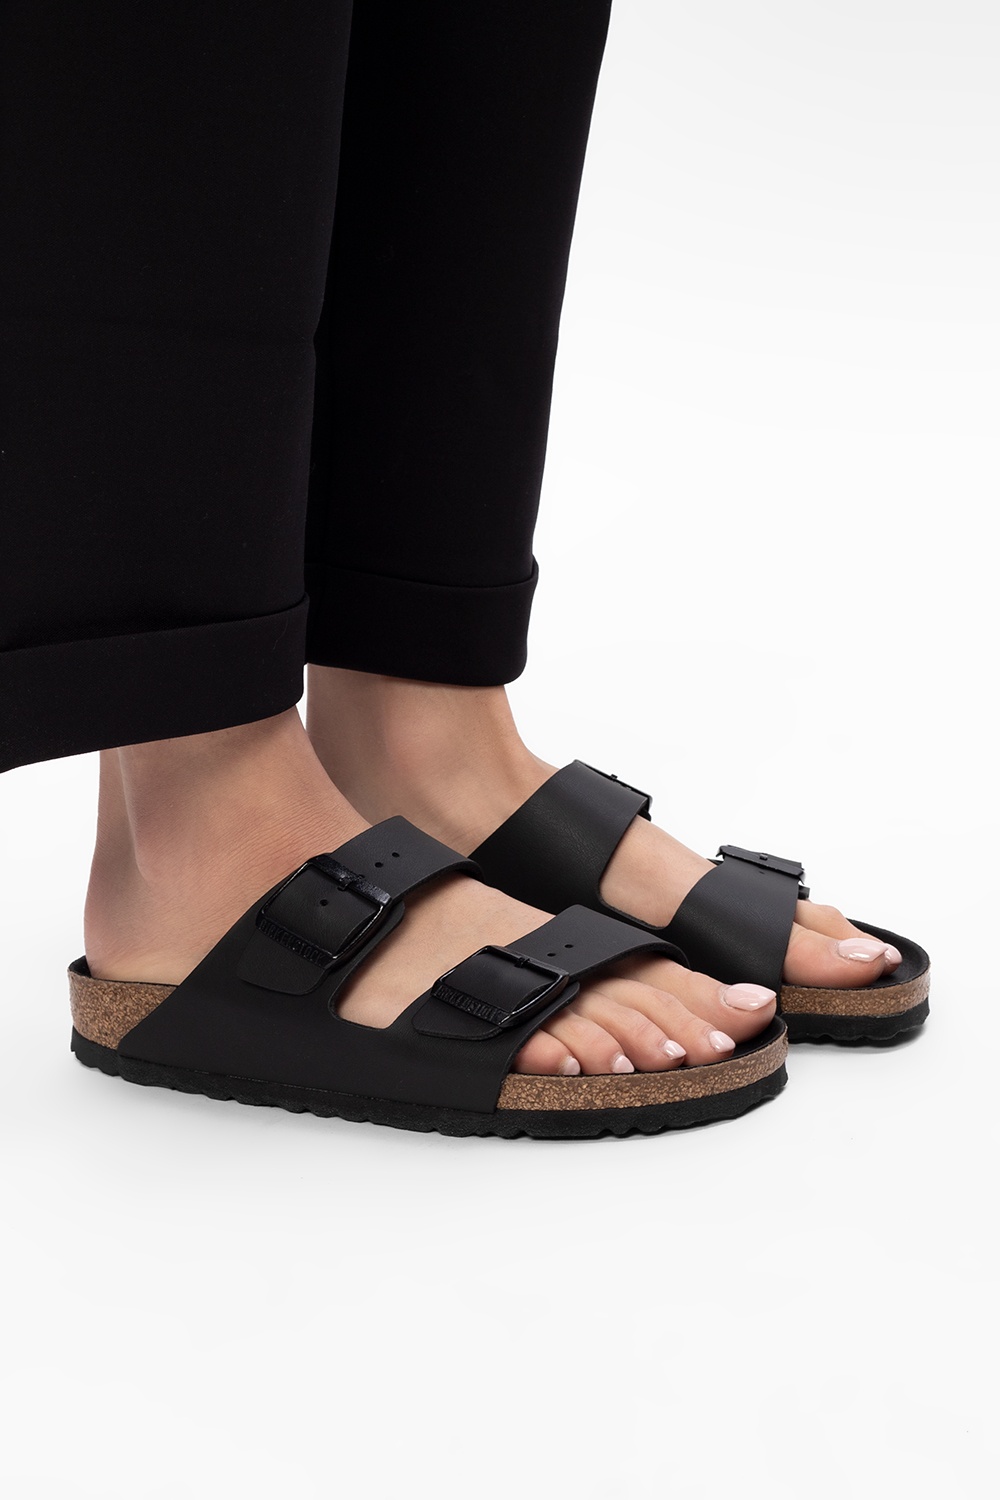 7 Ladies Arizona Beth Black Geo Sandals Sizes 6 7.5 8.5 